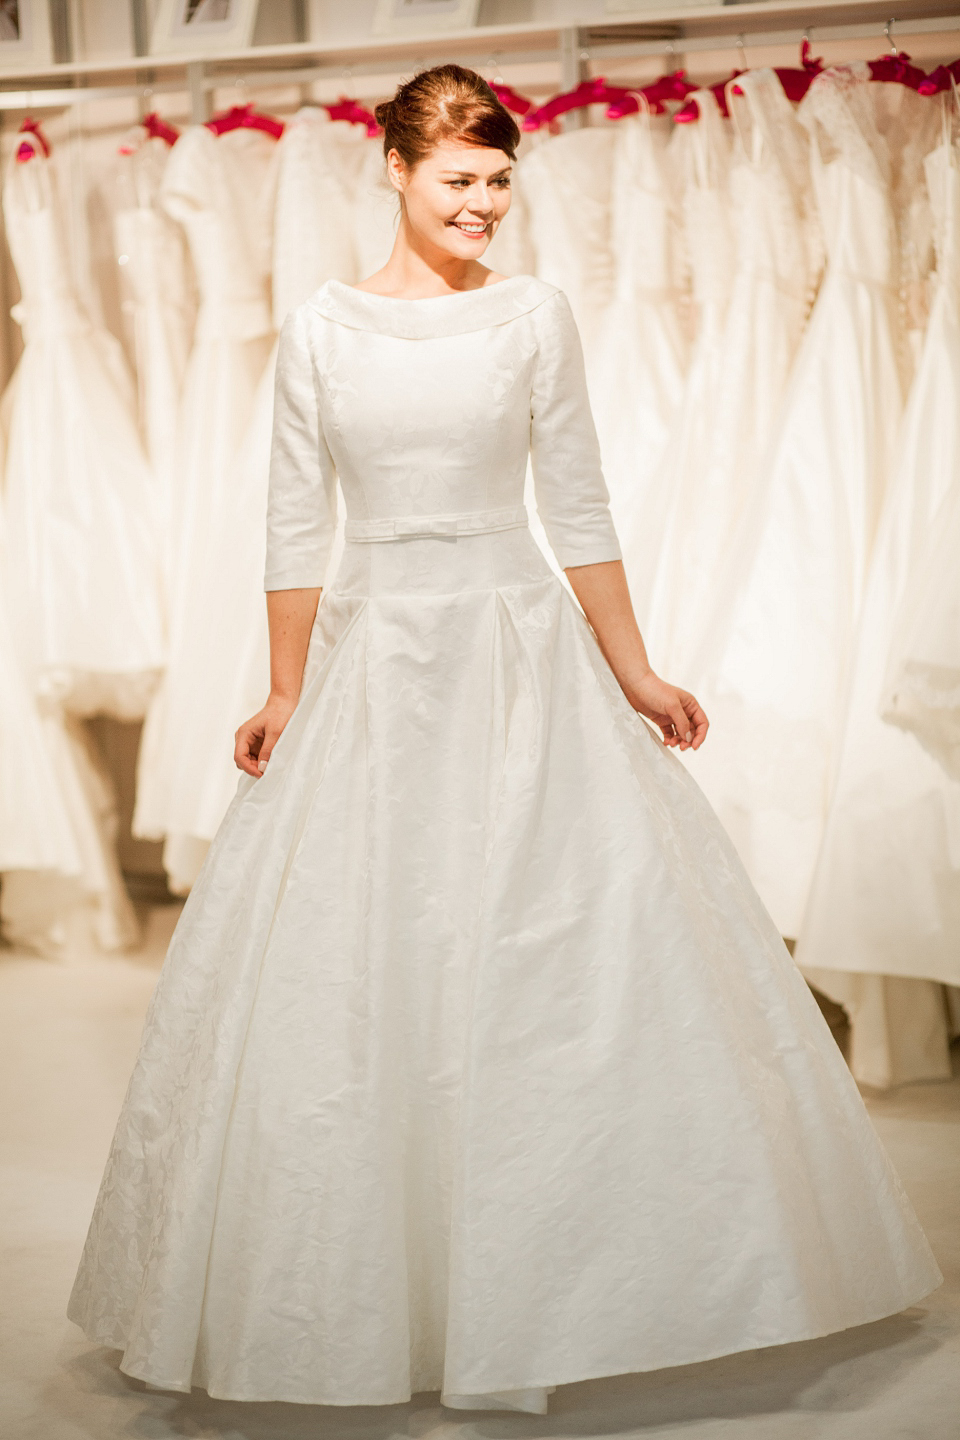 Blue Bridalwear wedding dresses at The White Gallery, London, April 2014